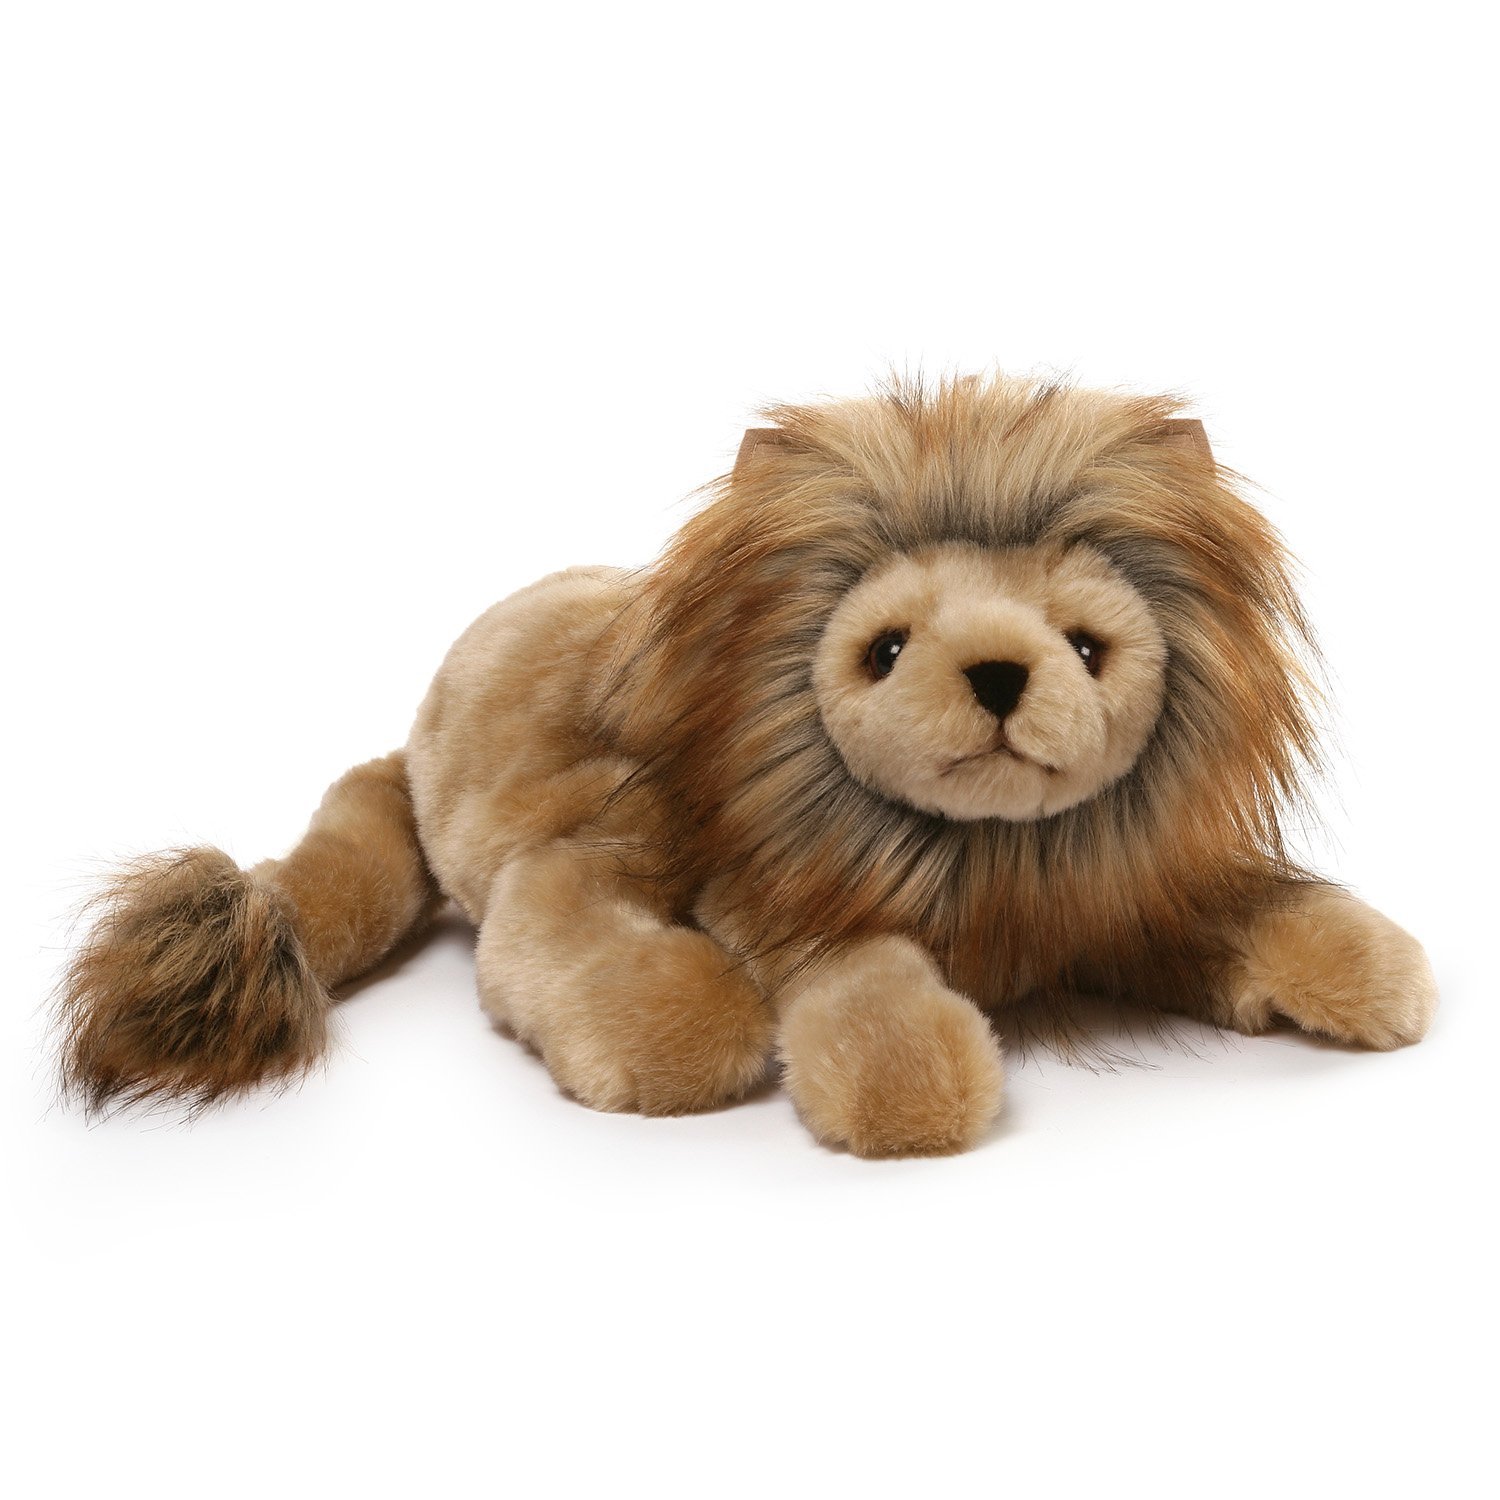 lion teddy bear